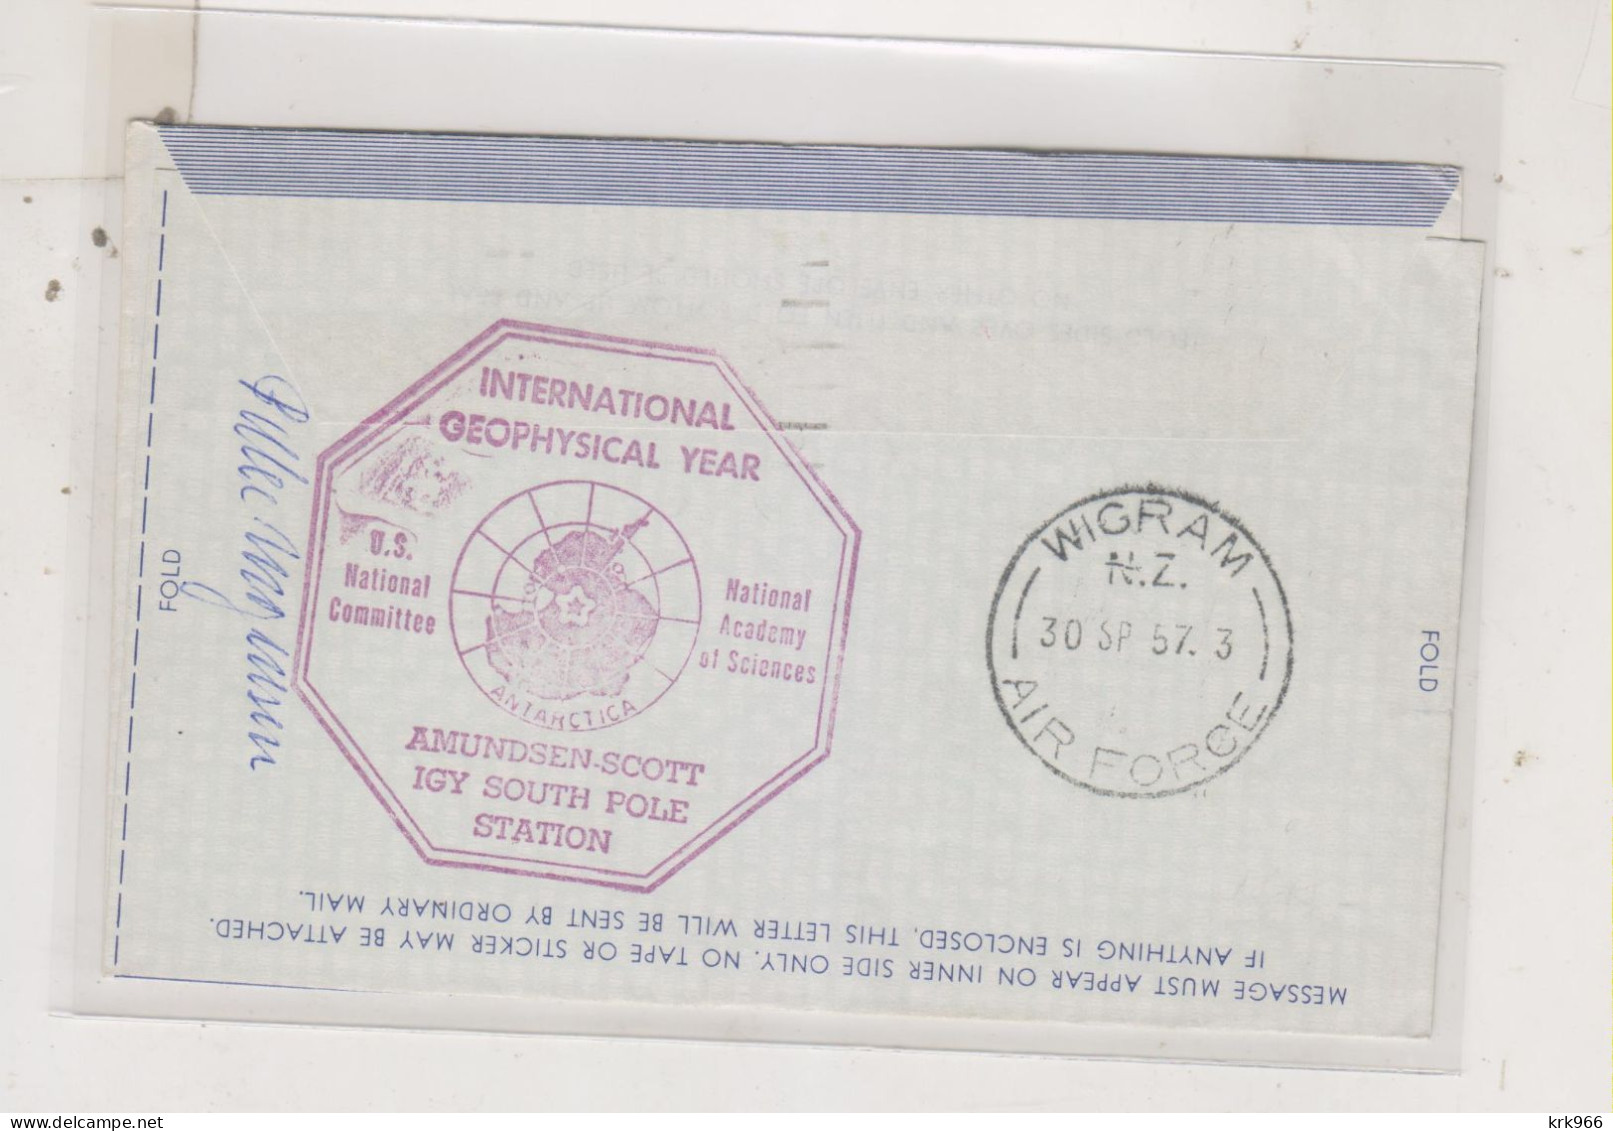 UNITED NATIONS 1957 Nice Airmail Stationery NEW YORK To AMUNDSEN SCOTT IGY SOUTH POLE STATION - Storia Postale